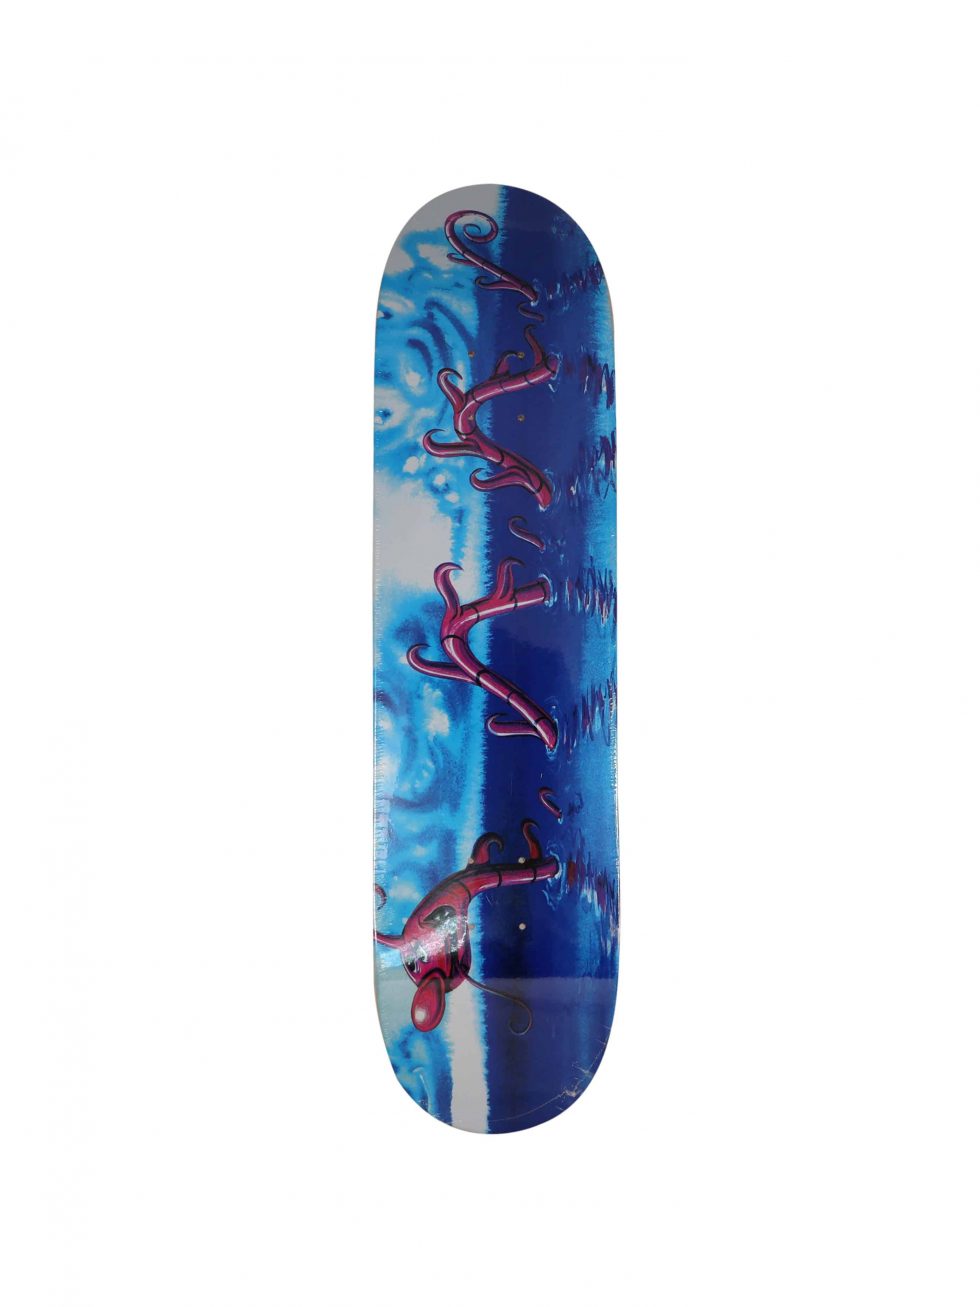 Kenny Scharf Skateboard Deck – Baer & Bosch Toy Auctions